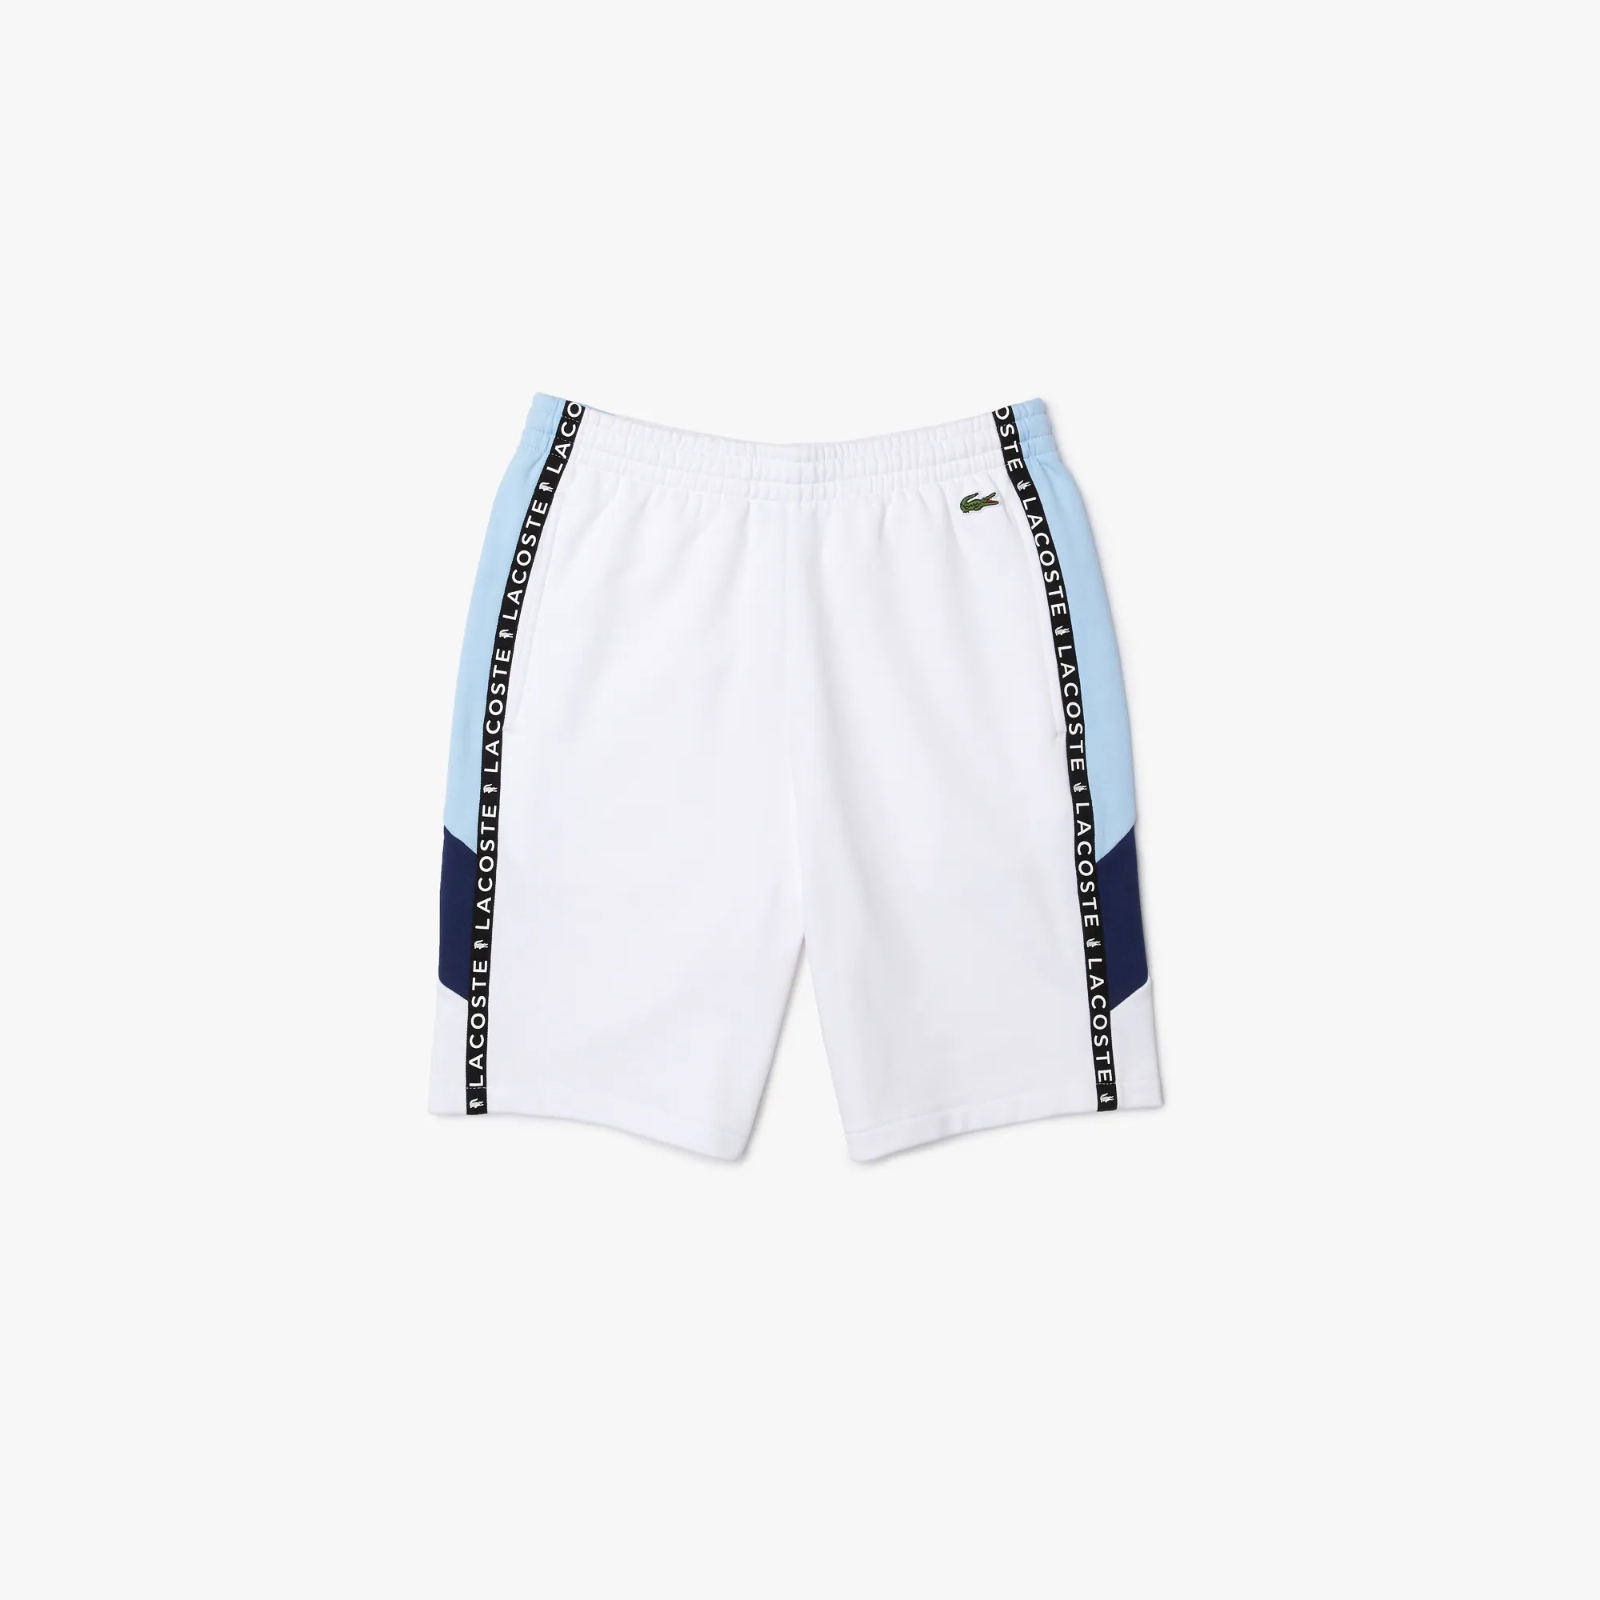 Men’s Lacoste Lettered Bands Fleece Bermuda Shorts GH6866-51